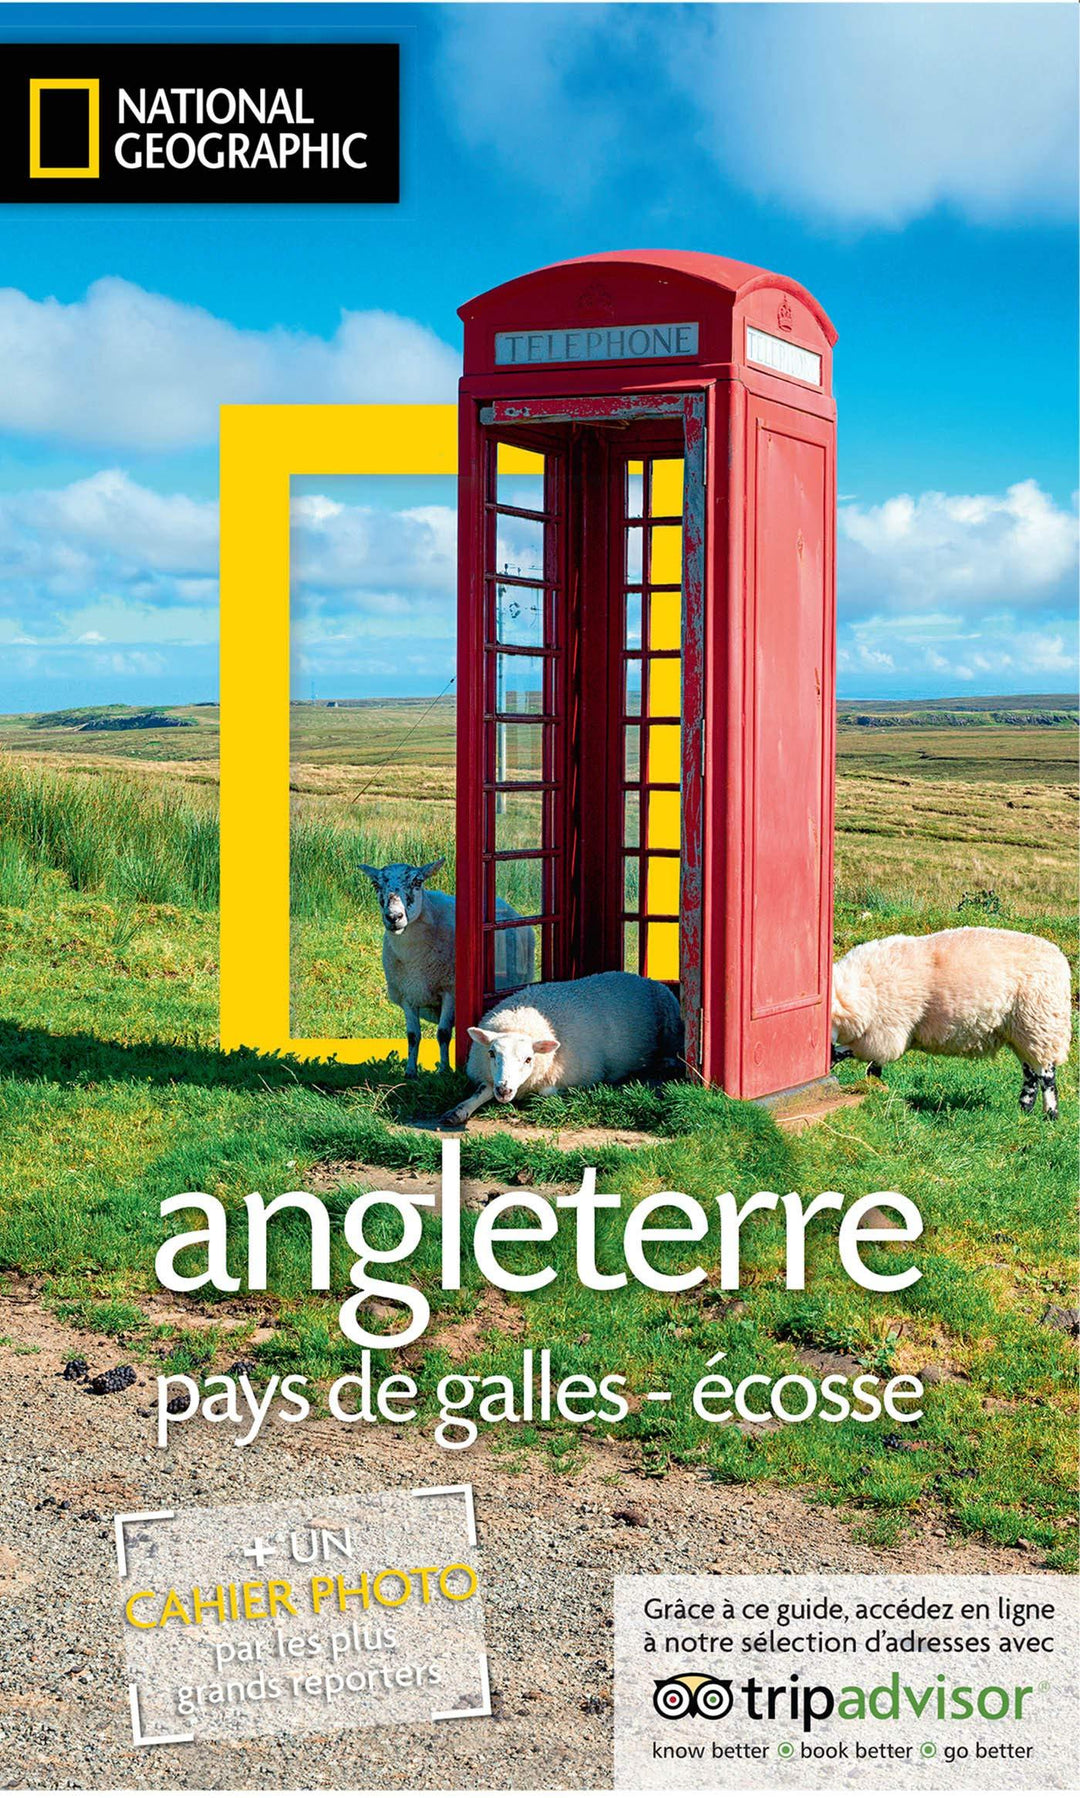 Guide de voyage - Angleterre, Pays de Galles, Ecosse - édition 2020 | National geographic guide de voyage National Geographic 